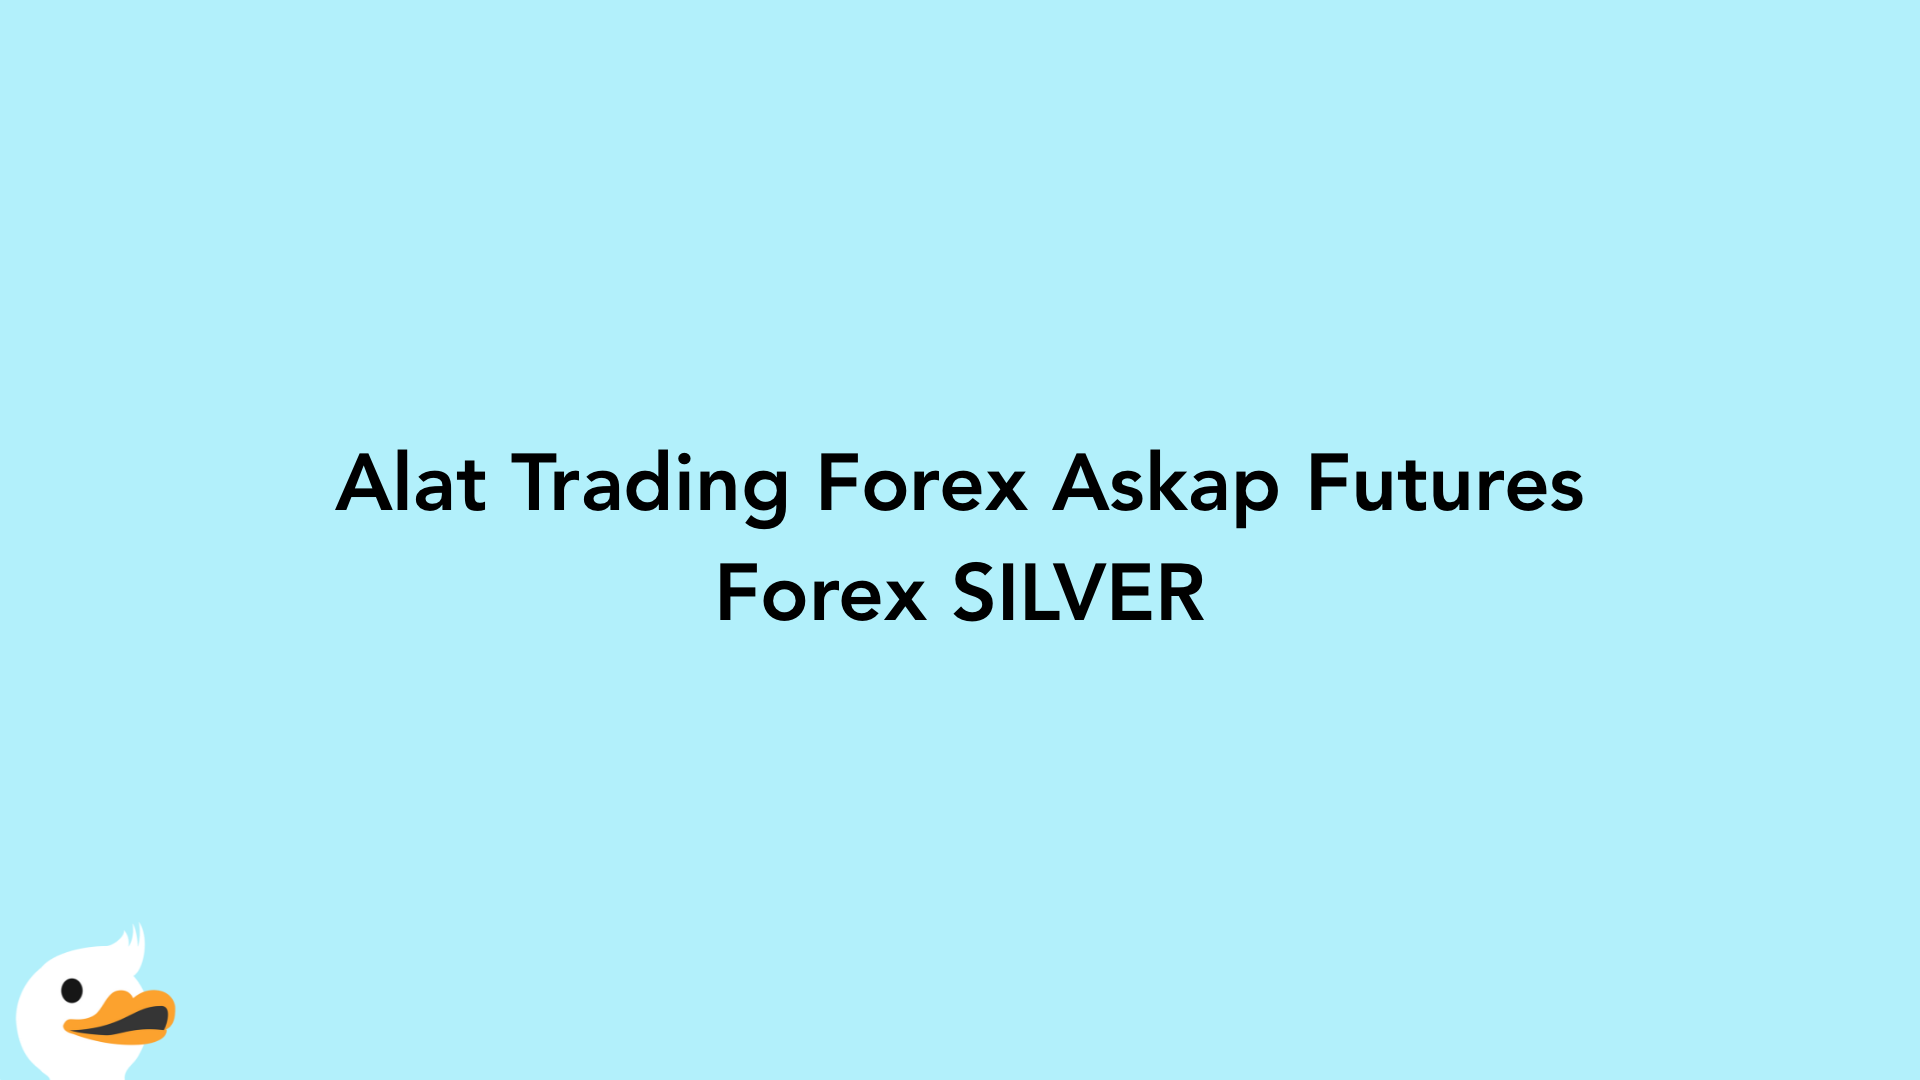 Alat Trading Forex Askap Futures Forex SILVER